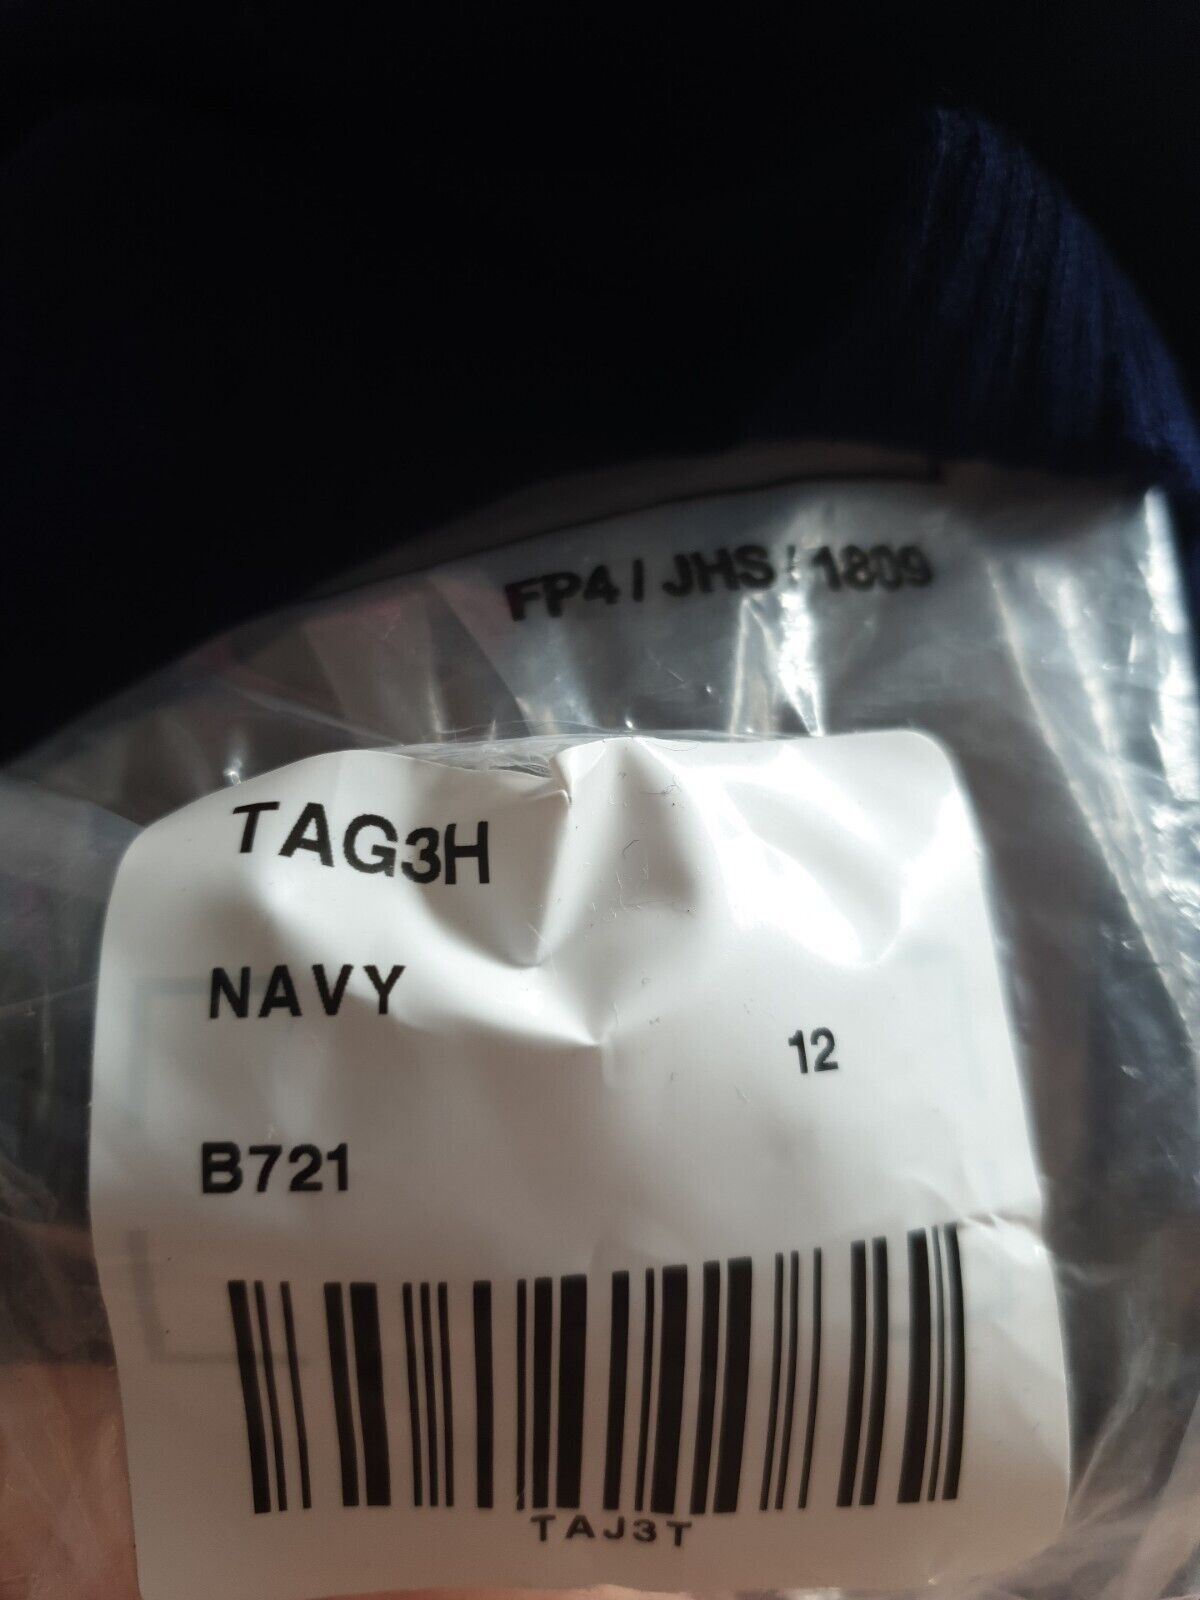 Button Through Knitted Navy Jumper Dress UK 12 ****Ref SW12